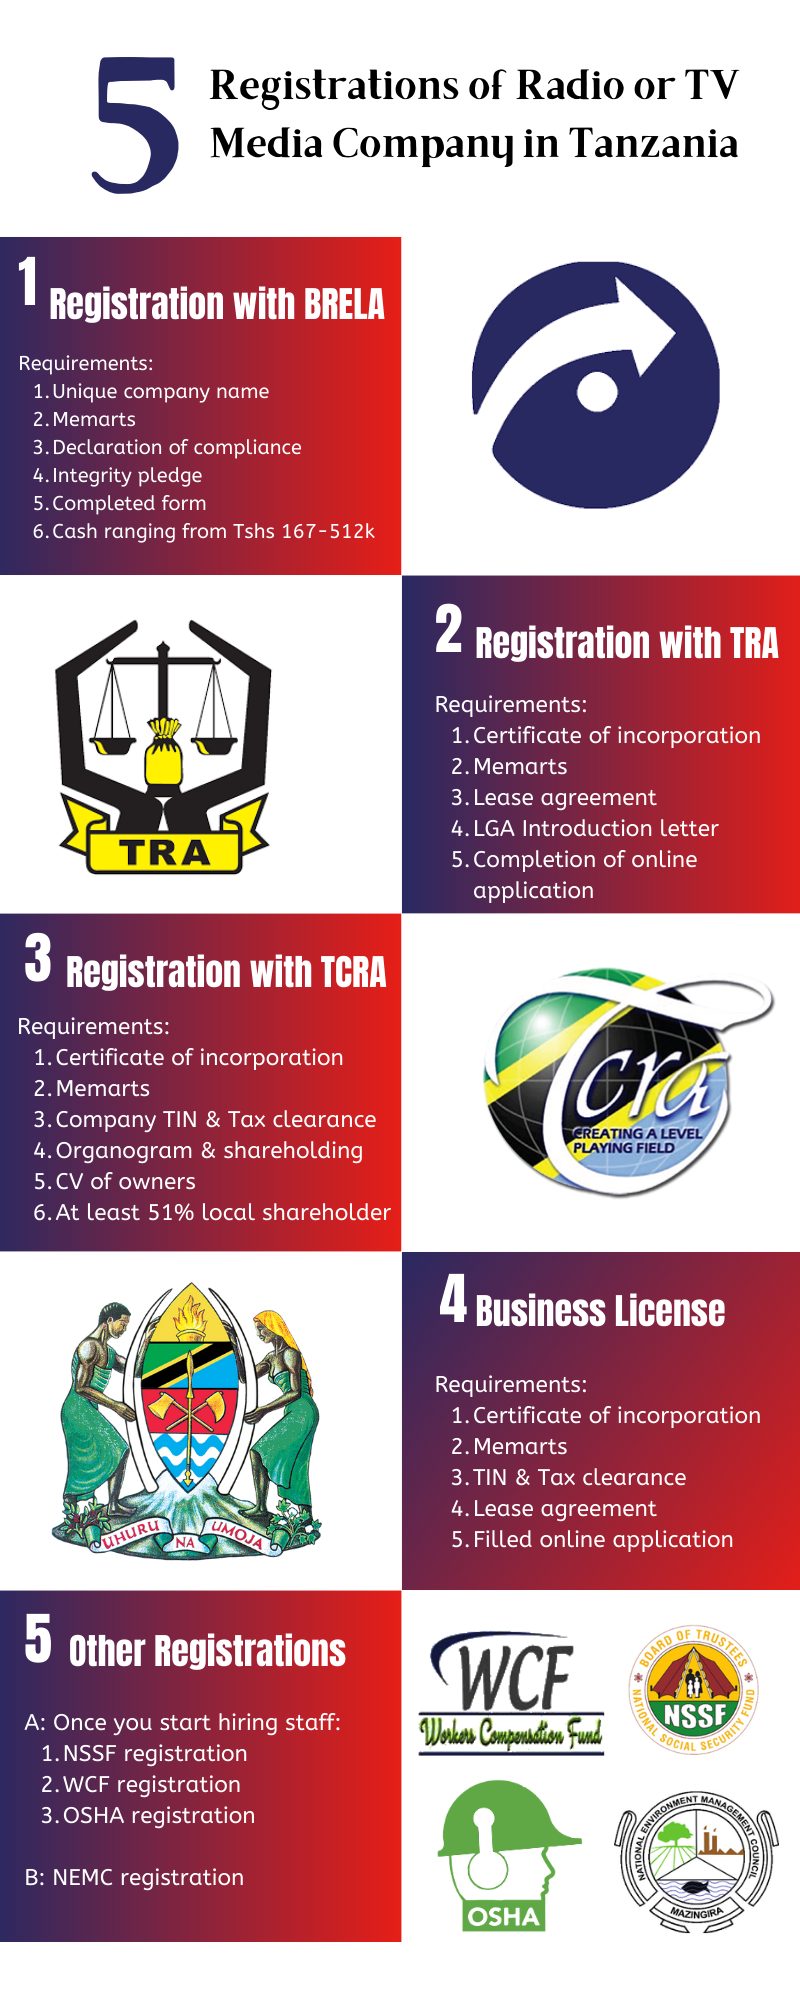 Registration of TV and Radio media company in Tanzania